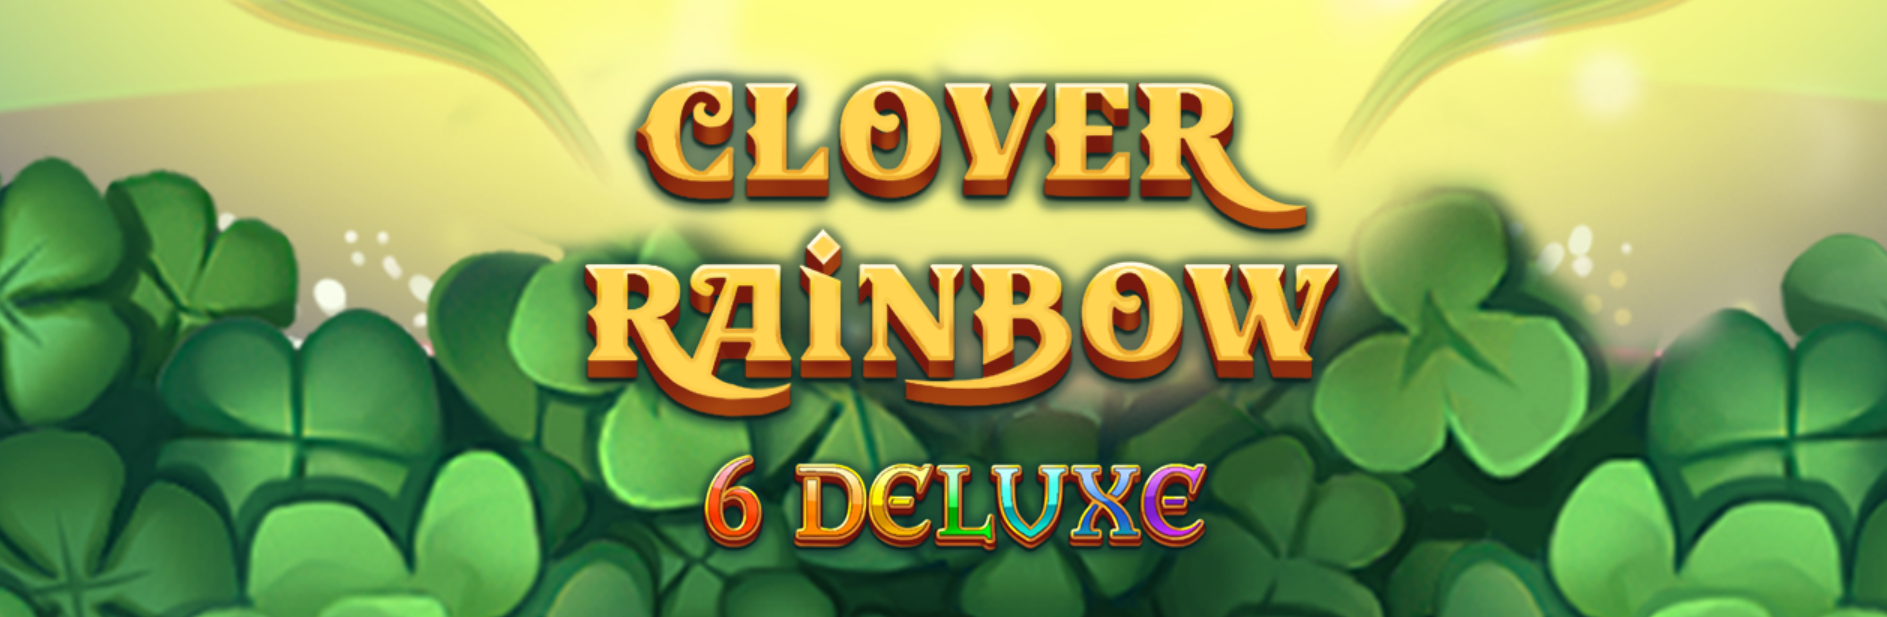 Clover the Rainbow 6 deluxe Slot